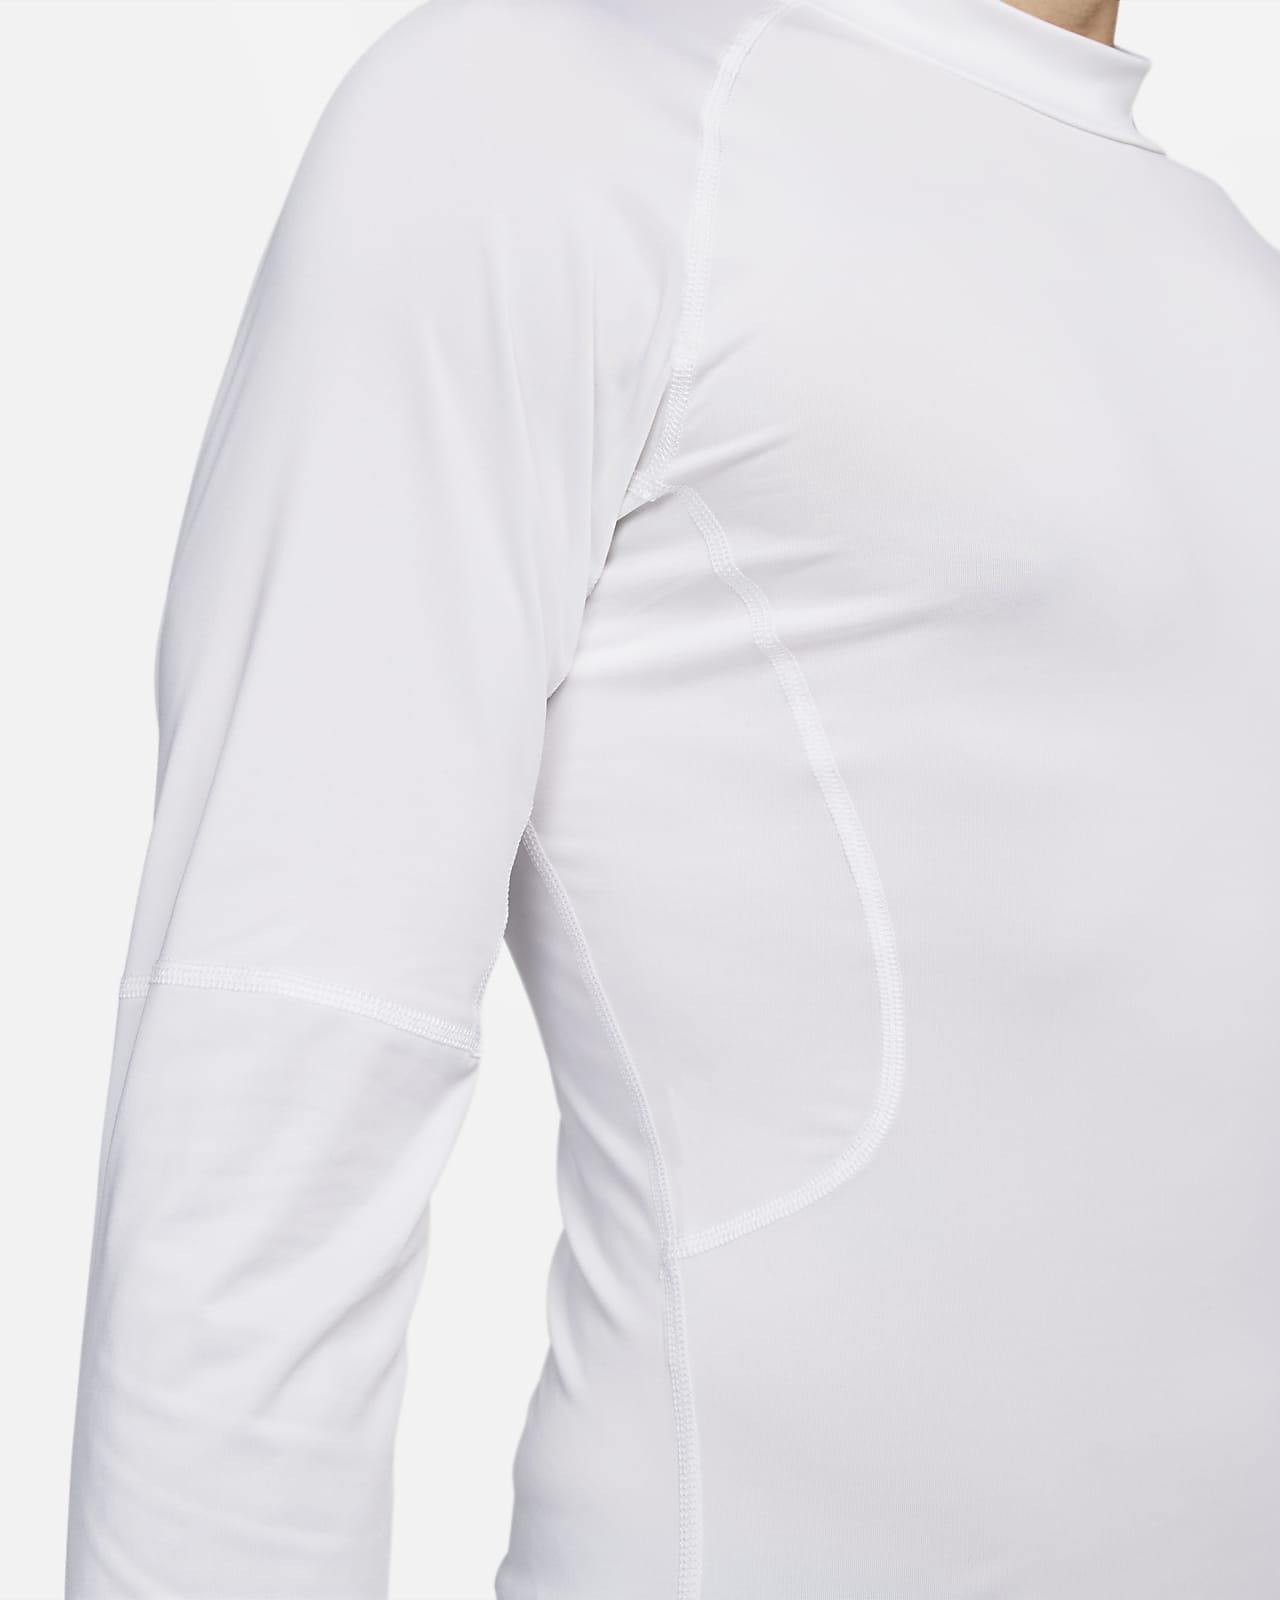 long sleeve nike compression shirt